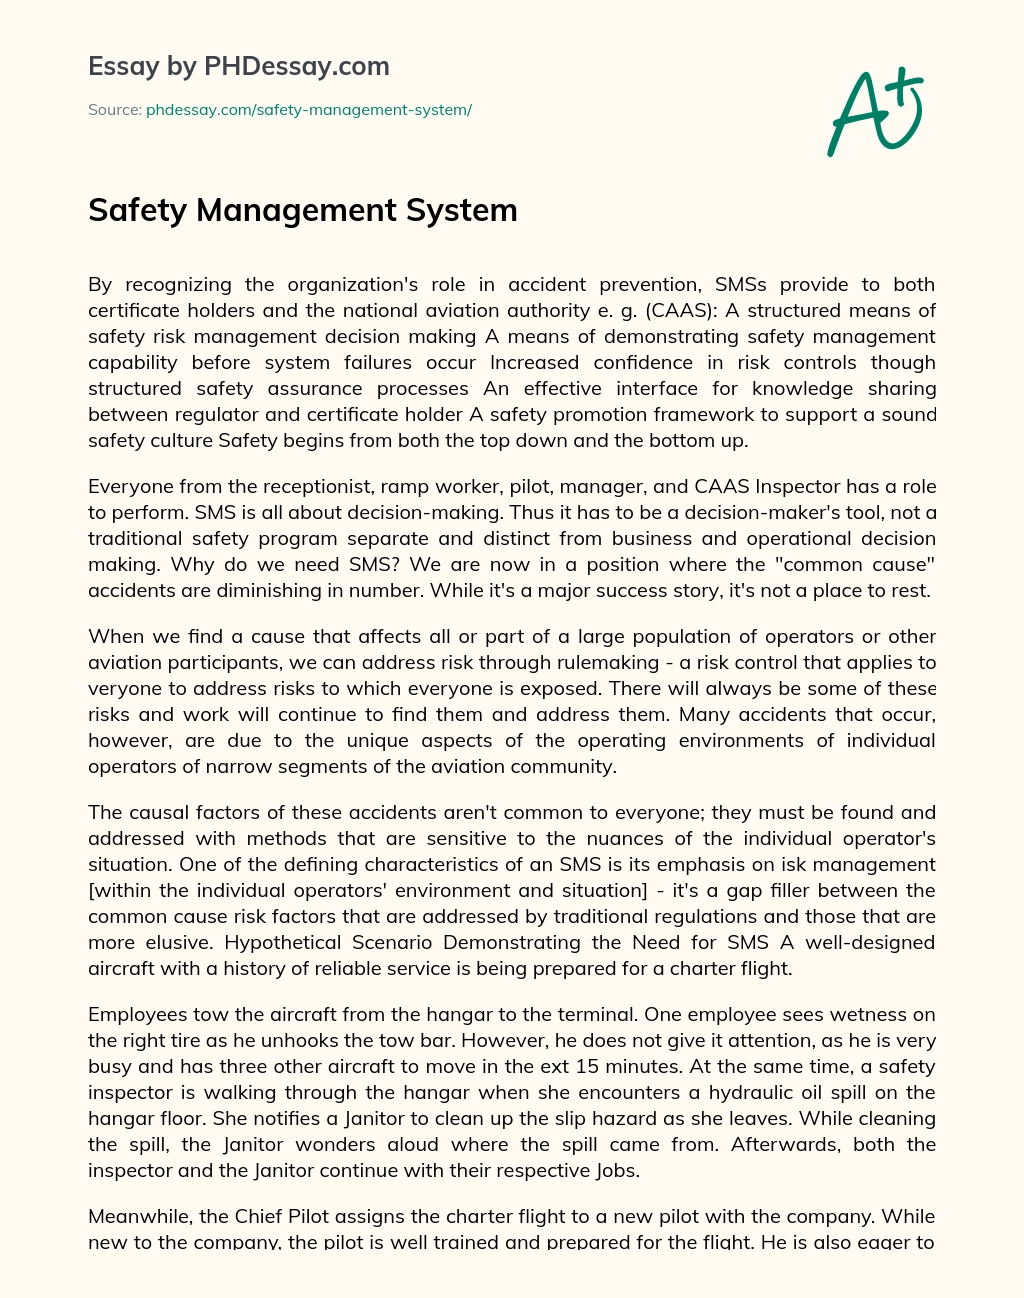 Safety Management System essay